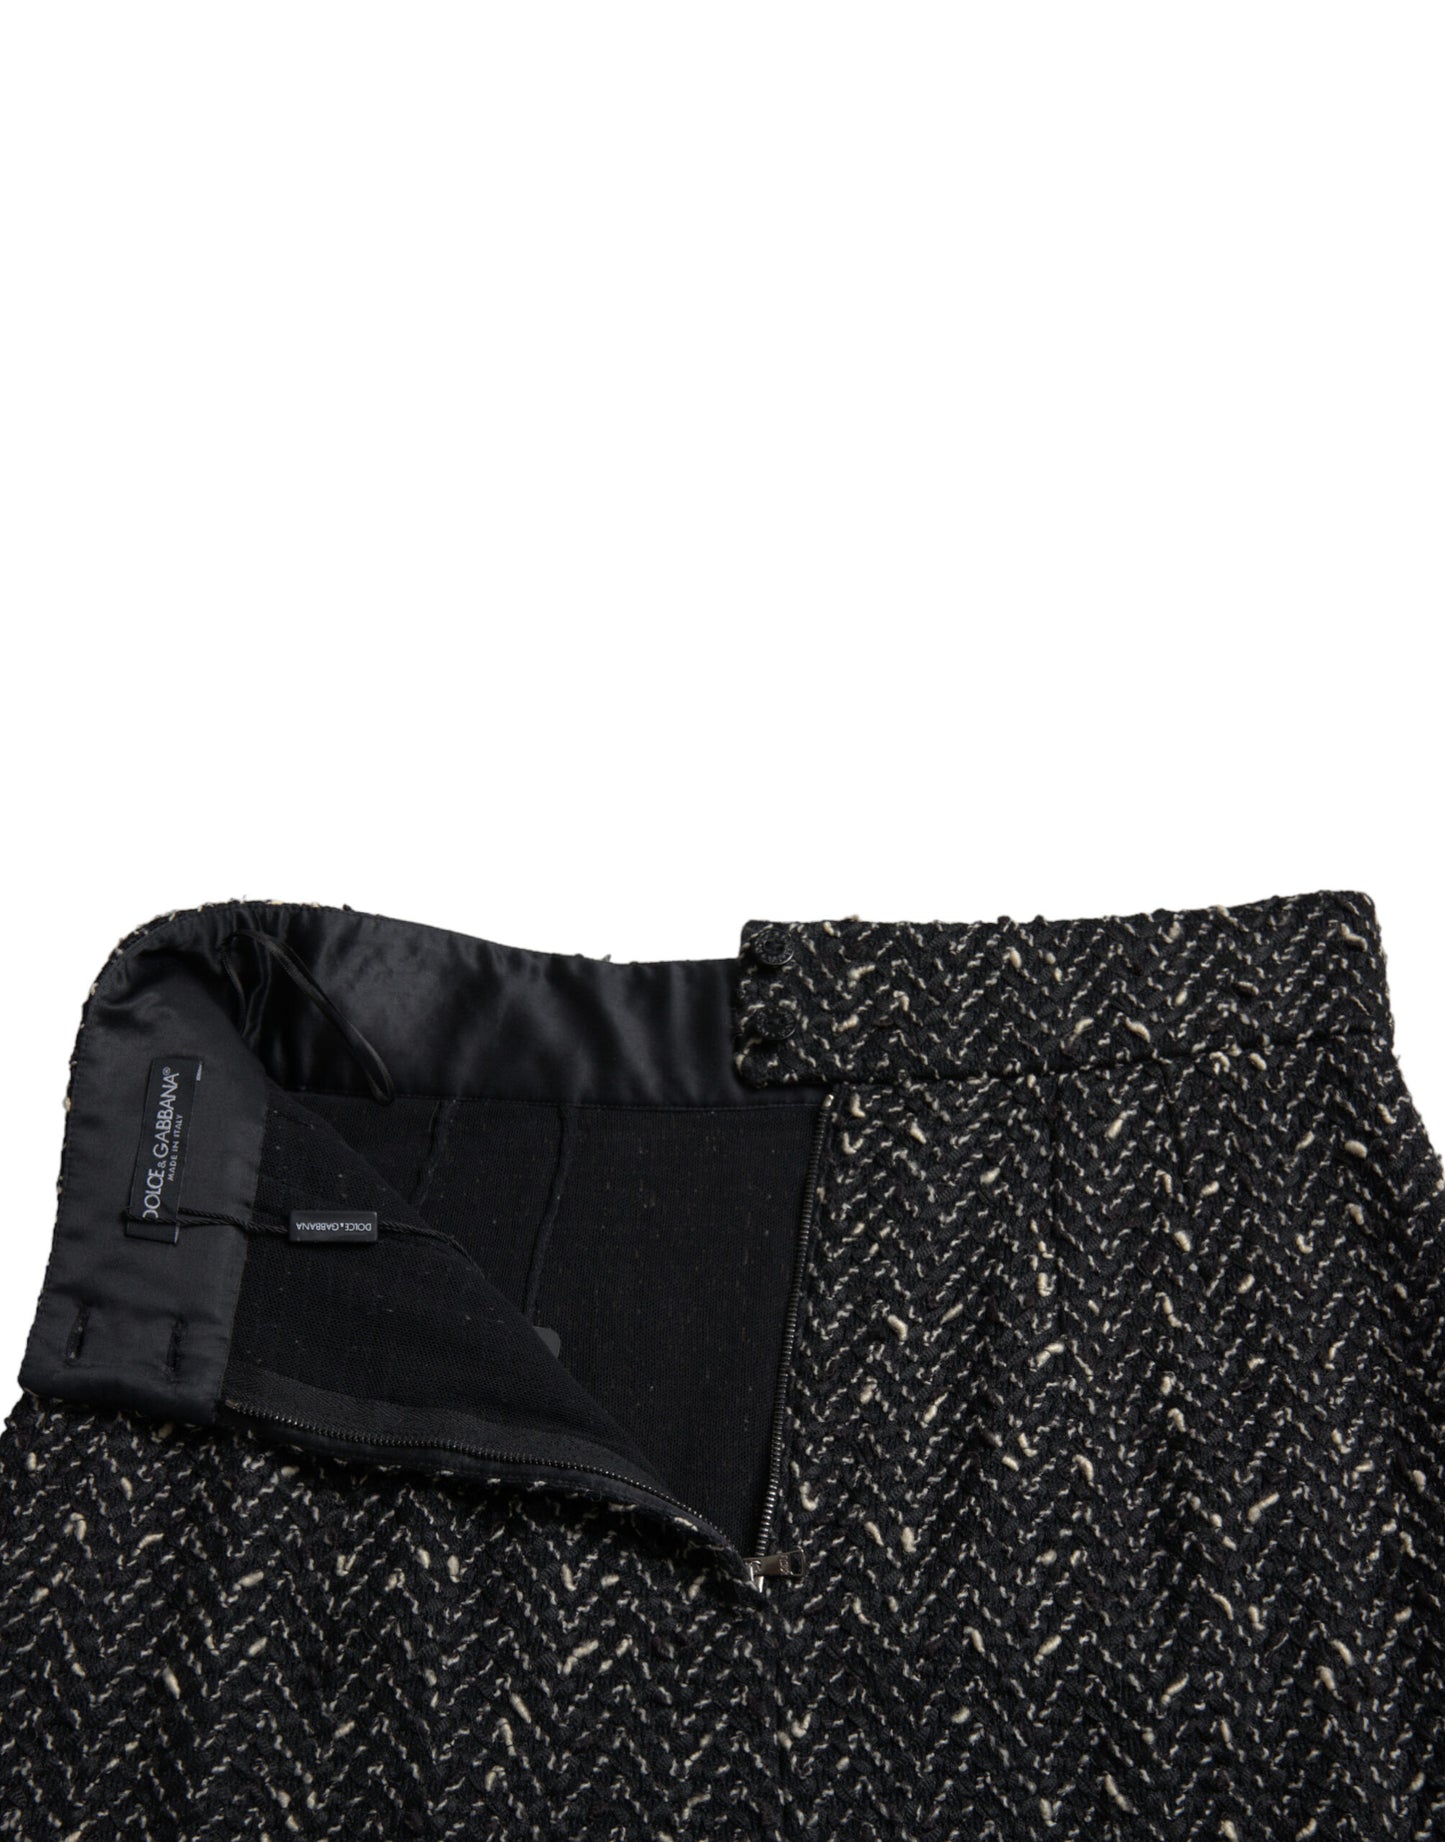 Dolce & Gabbana Elegant Tweed High-Waist Mini Skirt